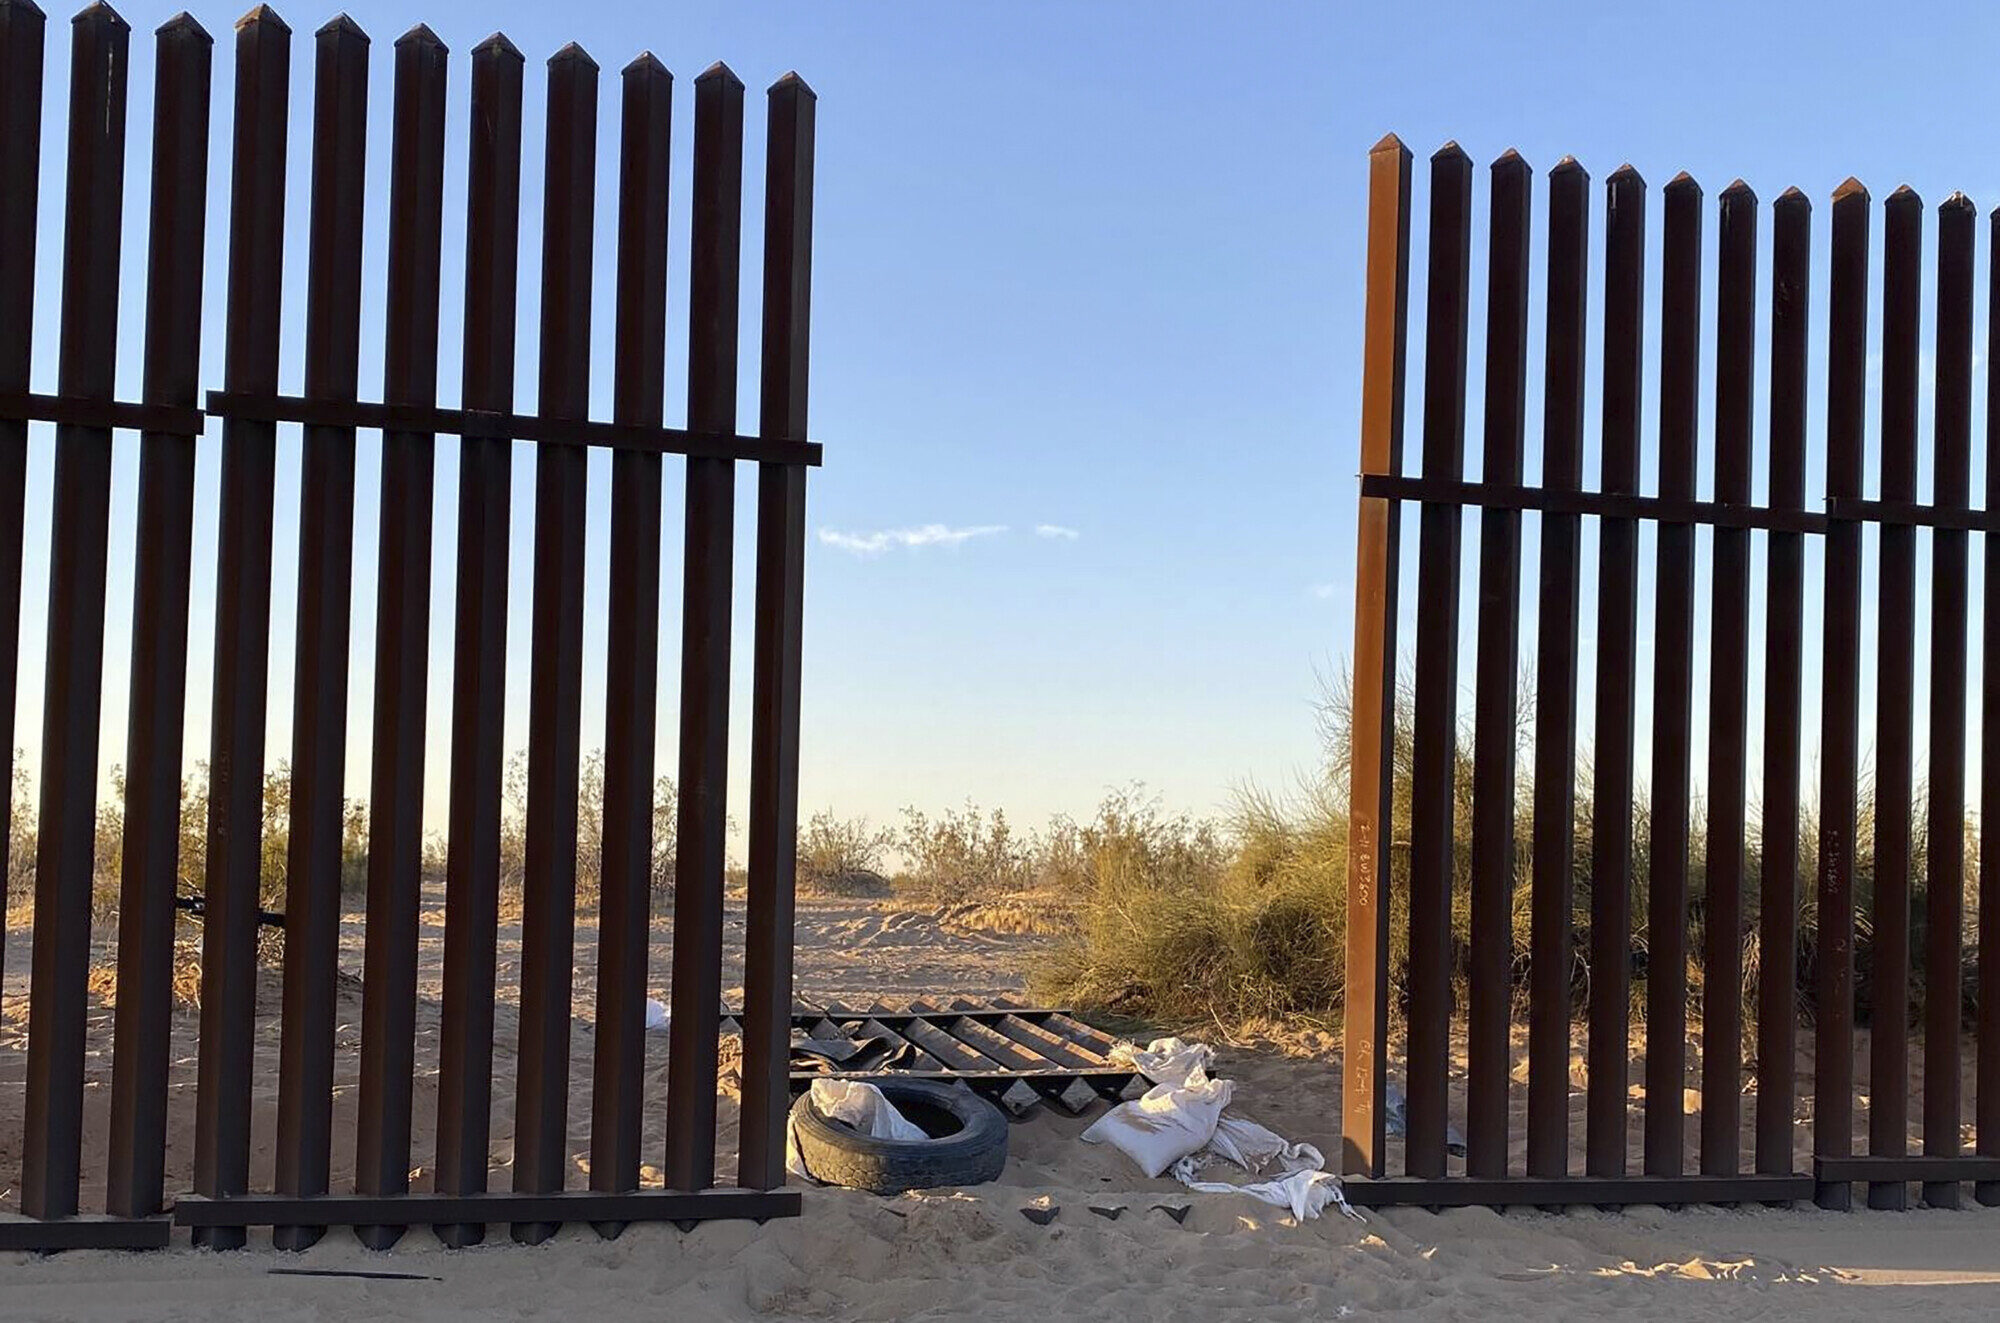 Ms-13 Gang Member Caught Illegally Crossing US-Mexico Border Into California: Border Patrol